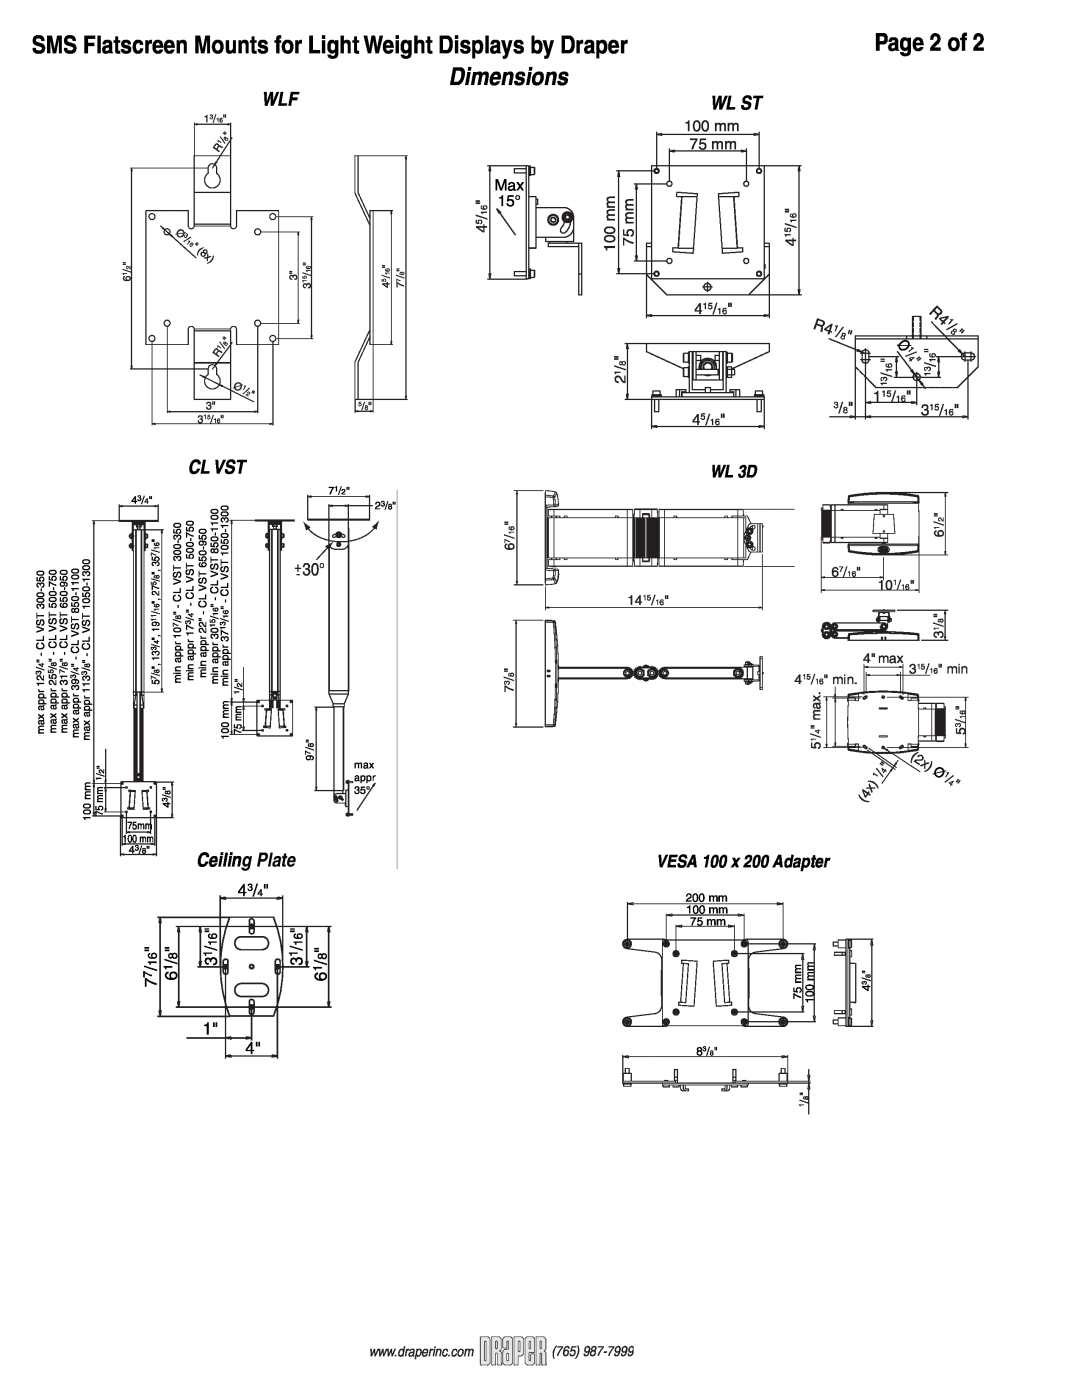 Draper CL VST 1050-1300 Cl Vst, WL 3D, VESA 100 x 200 Adapter, Dimensions, Page 2 of, Wl St, 100mm 75 mm, mm mm, 21/8 